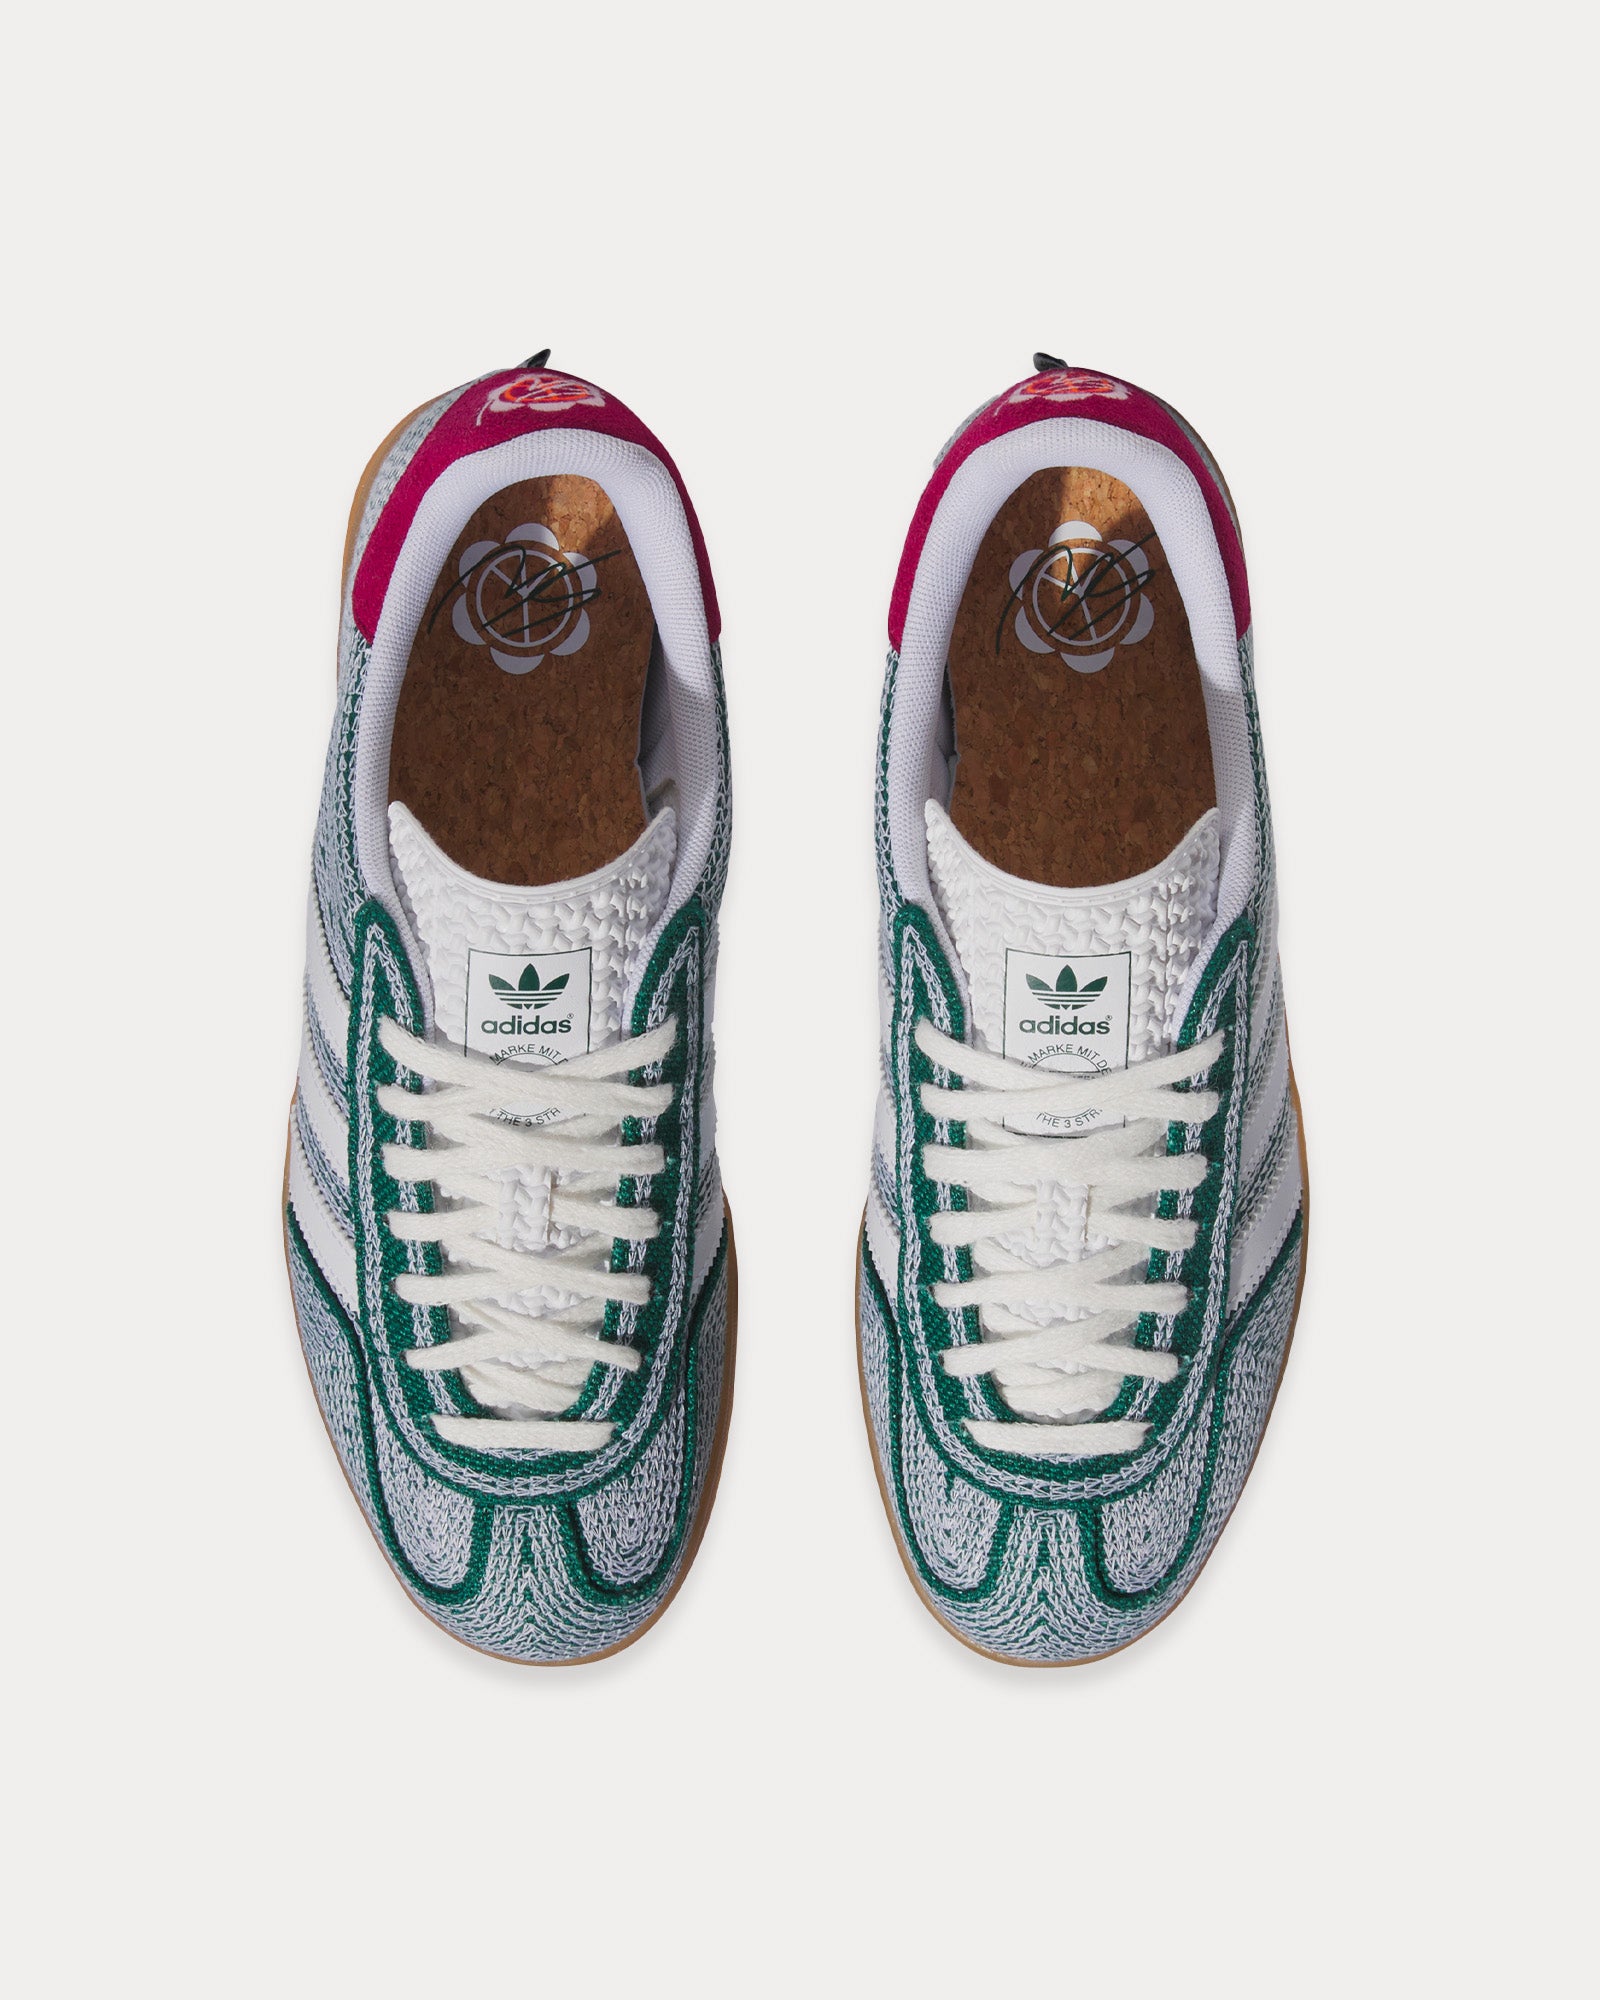 Adidas x Sean Wotherspoon - Gazelle Indoor Collegiate Green / Cloud White / Gum Low Top Sneakers